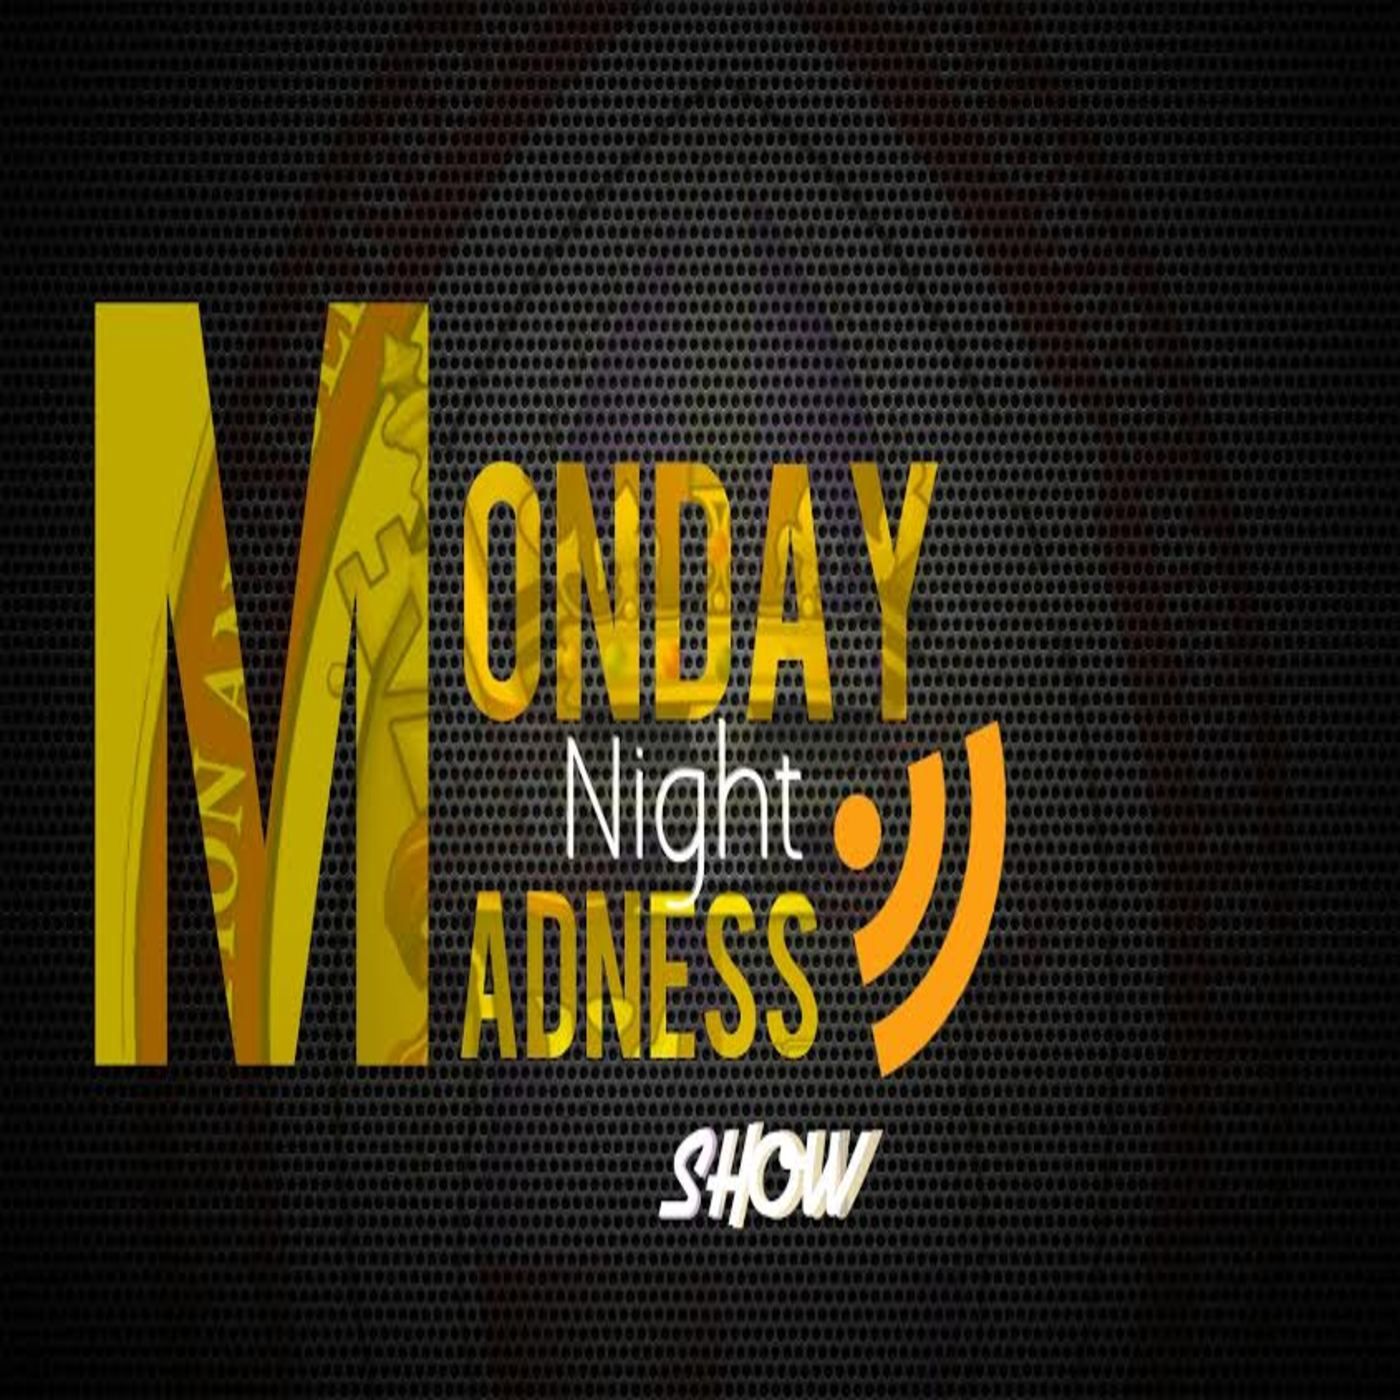 Monday Night Madness Show's tracks